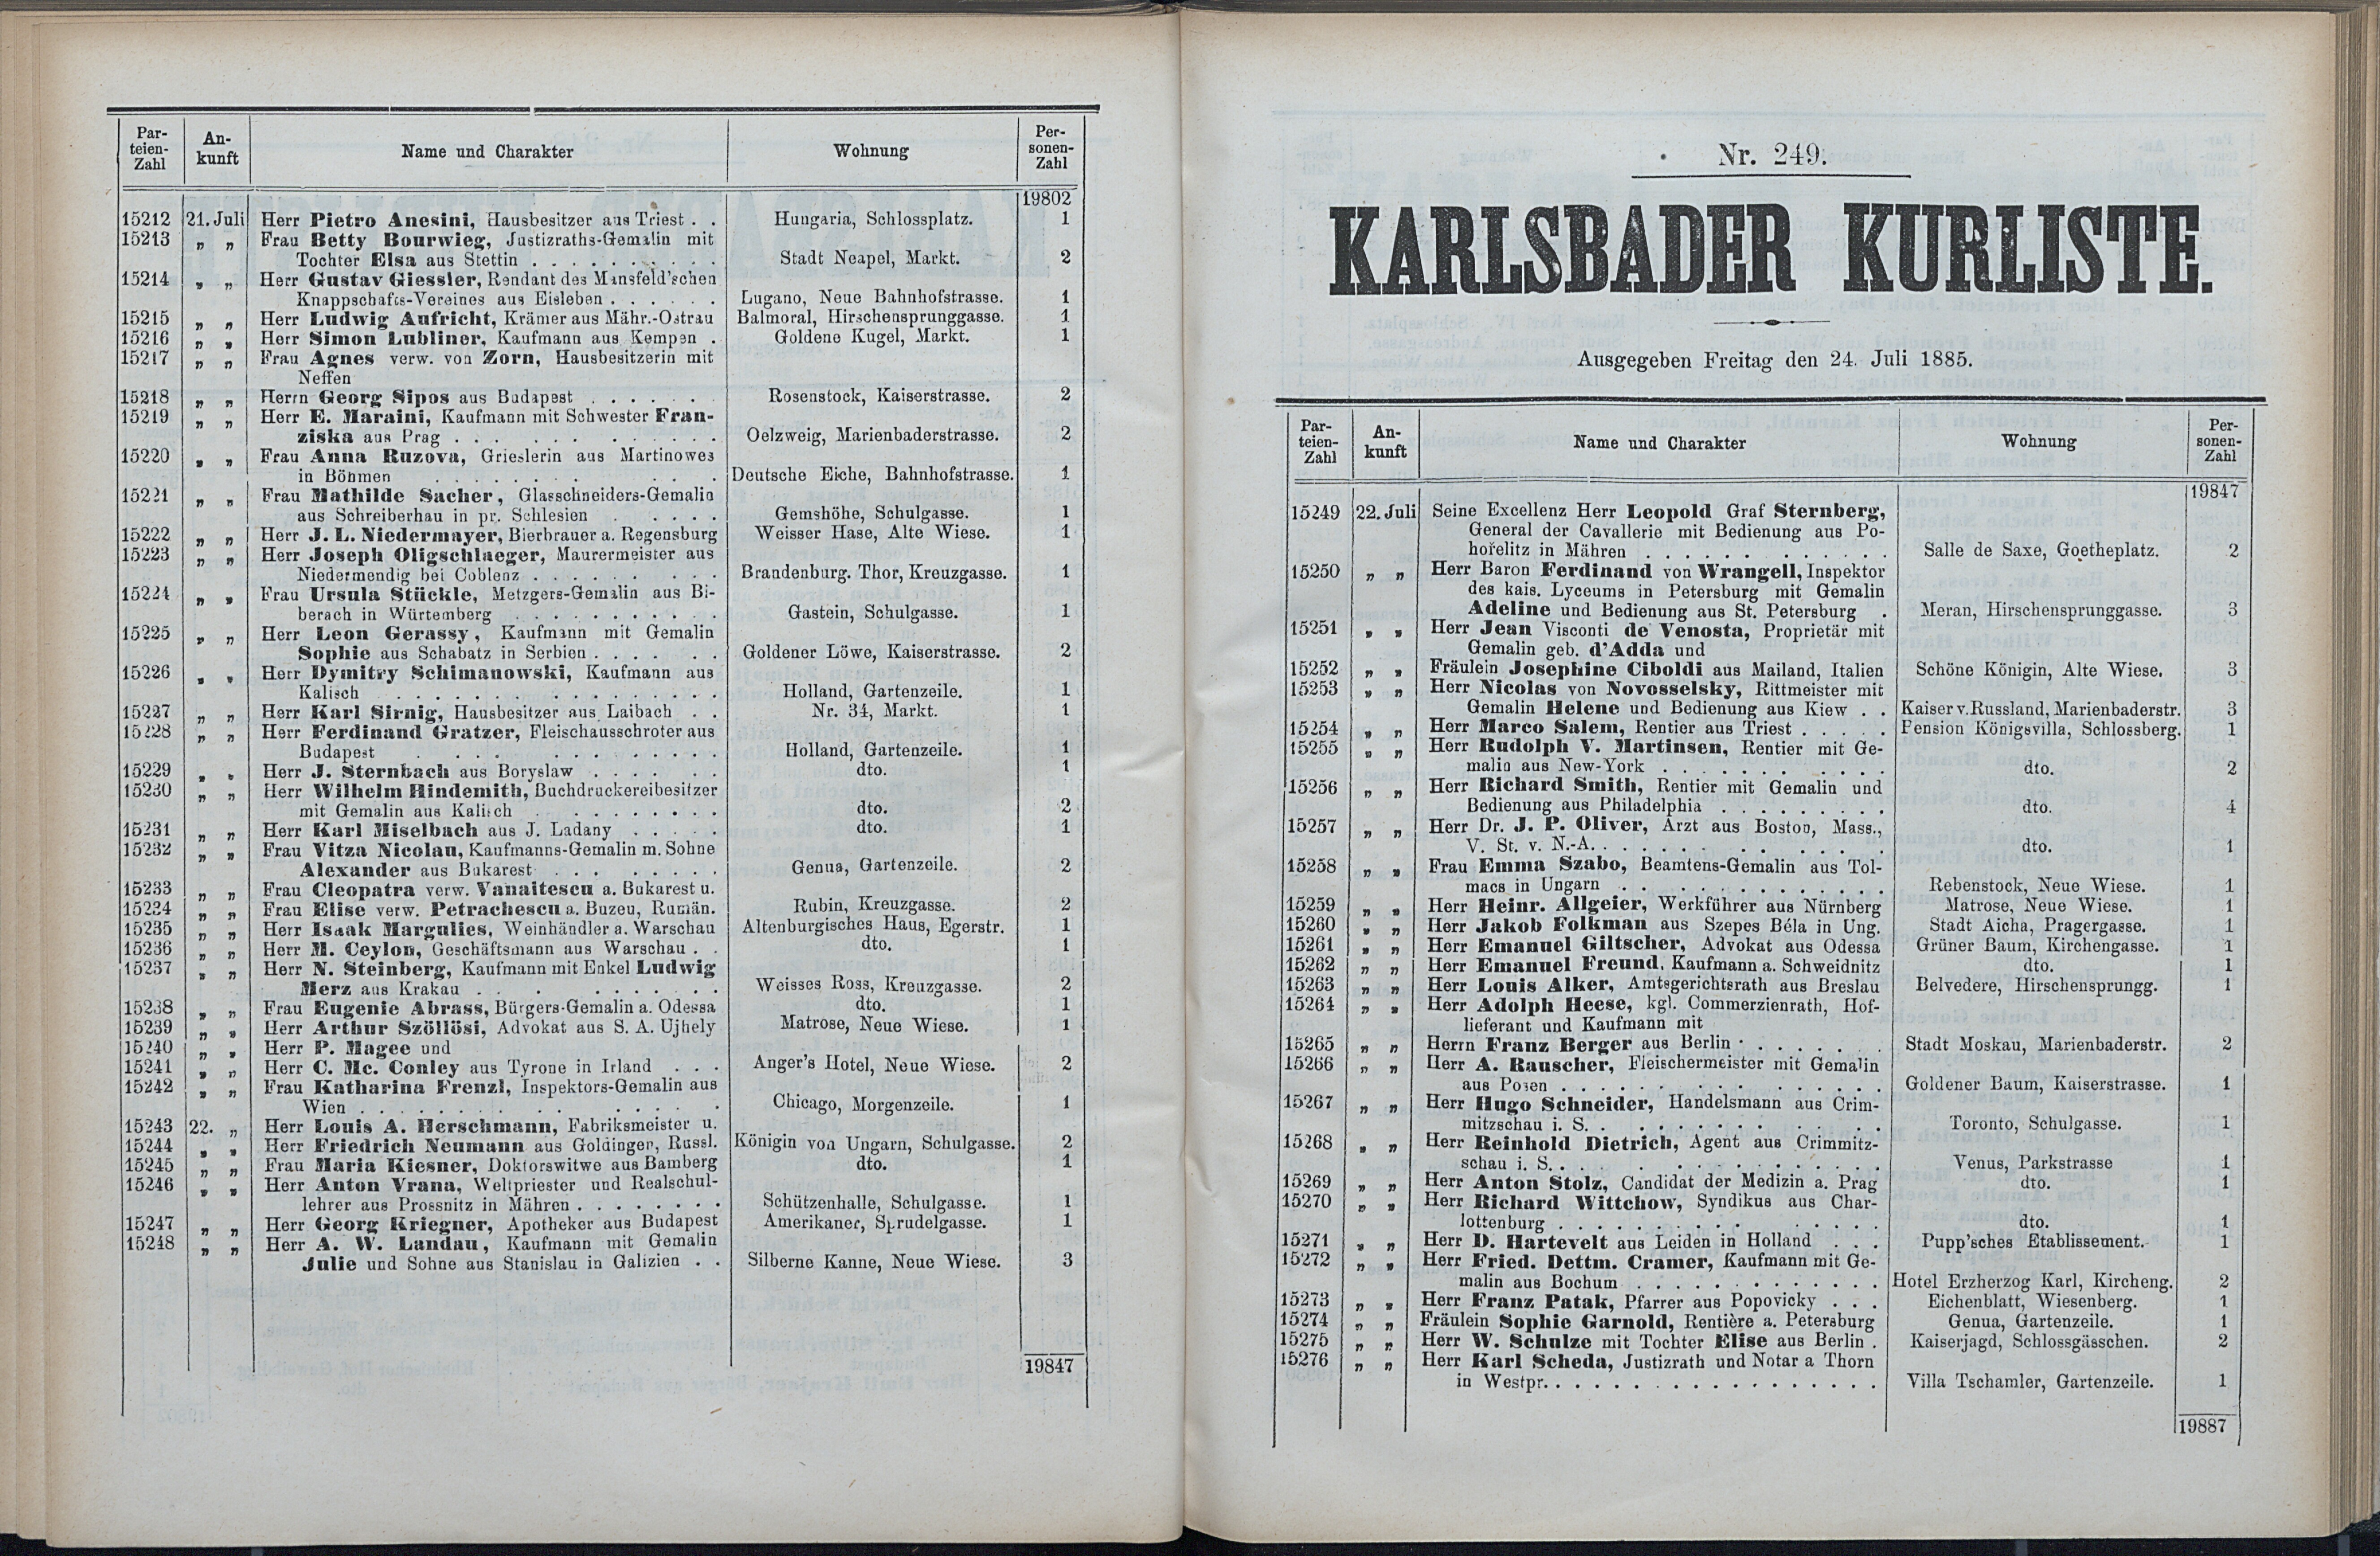 301. soap-kv_knihovna_karlsbader-kurliste-1885_3020